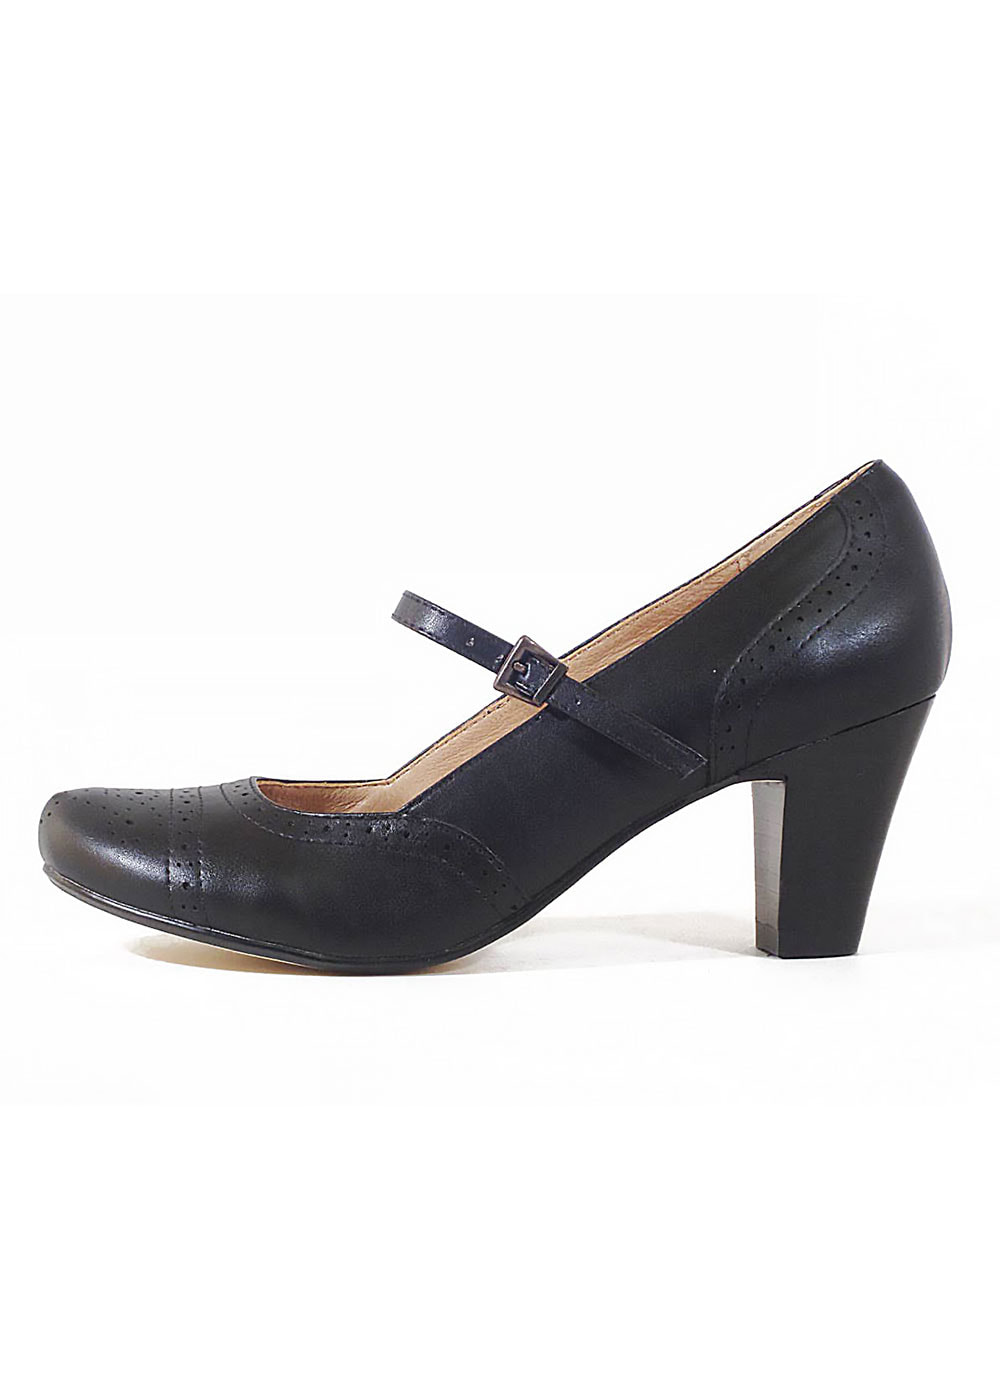 American Duchess Spain: Millie Women's 1920s Mary Jane Shoes (Black)